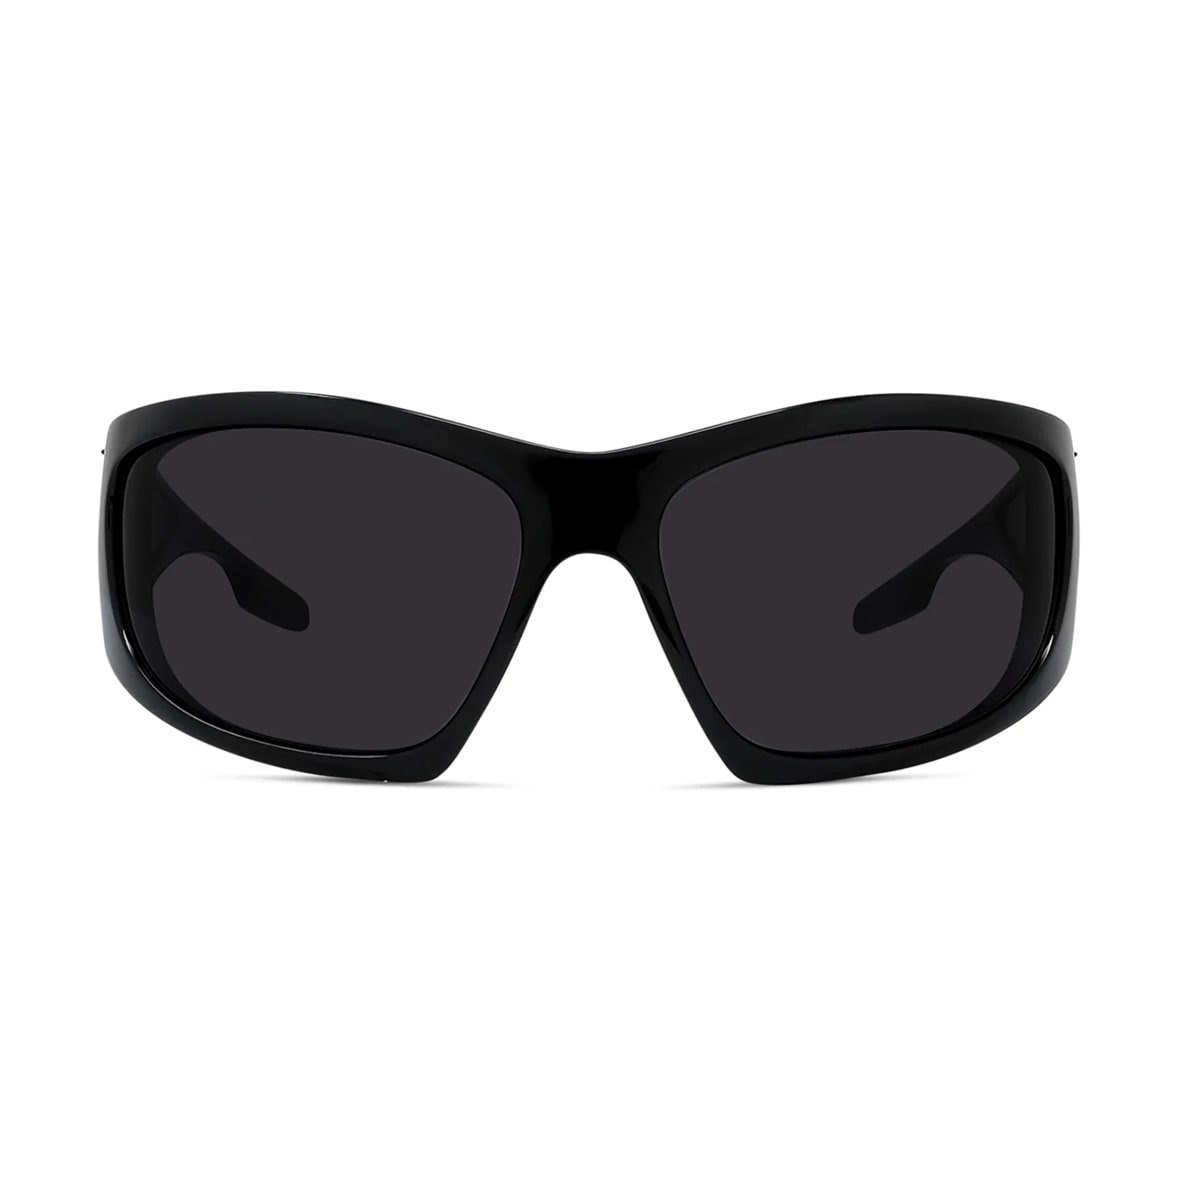 Gv40051i 01a Sunglasses